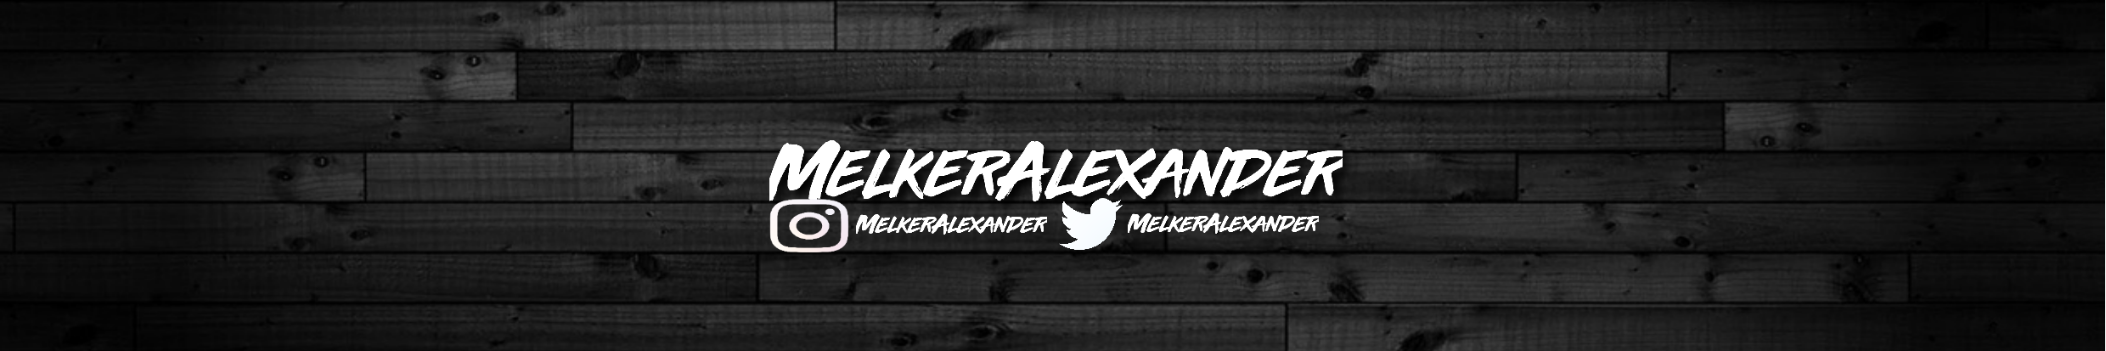 MelkerAlexander